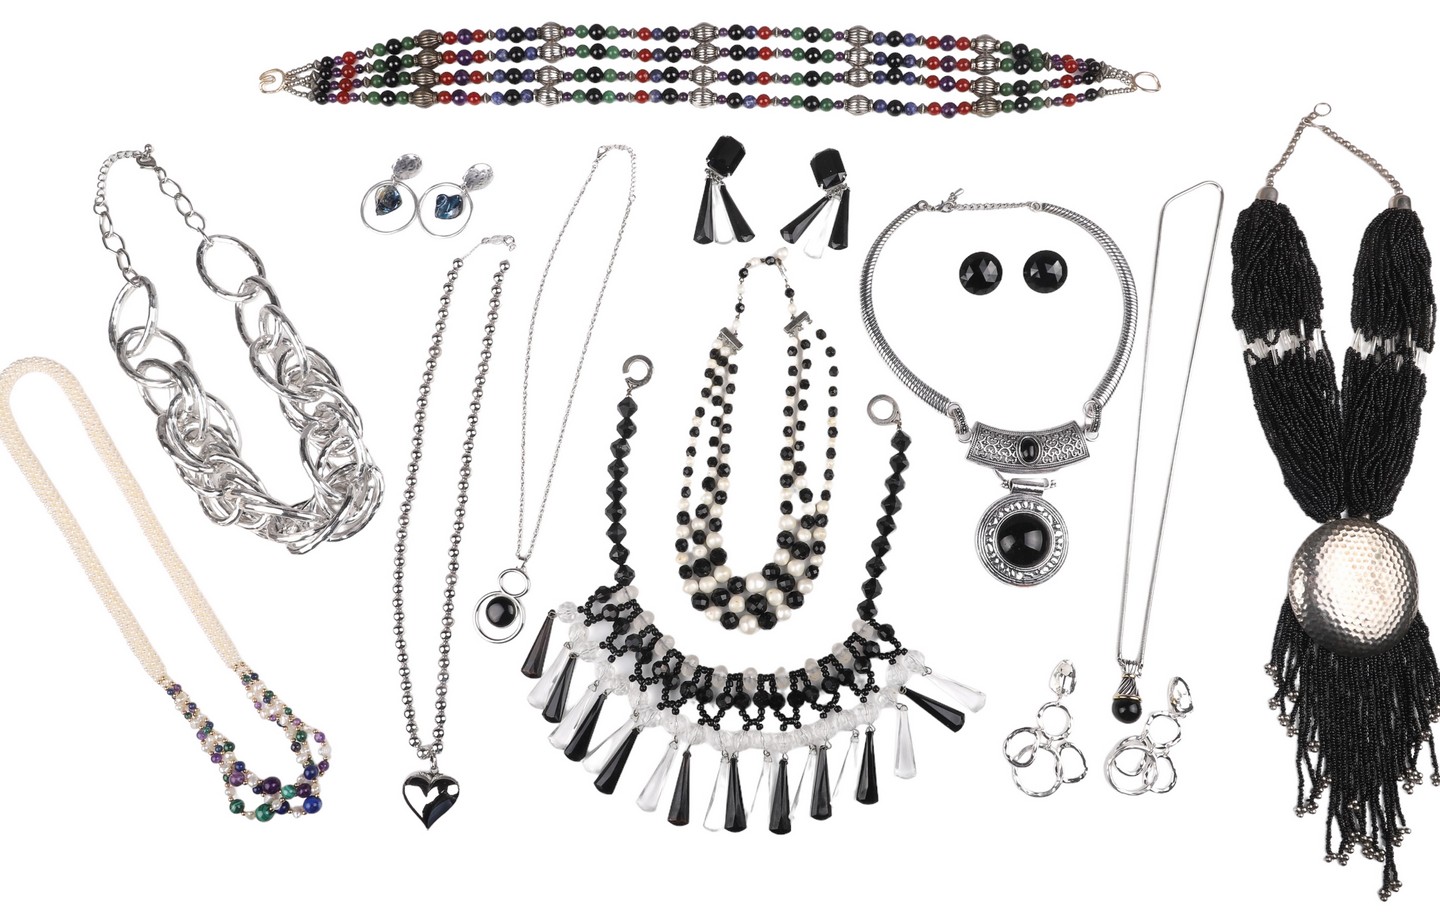 Silvertone costume jewelry to include